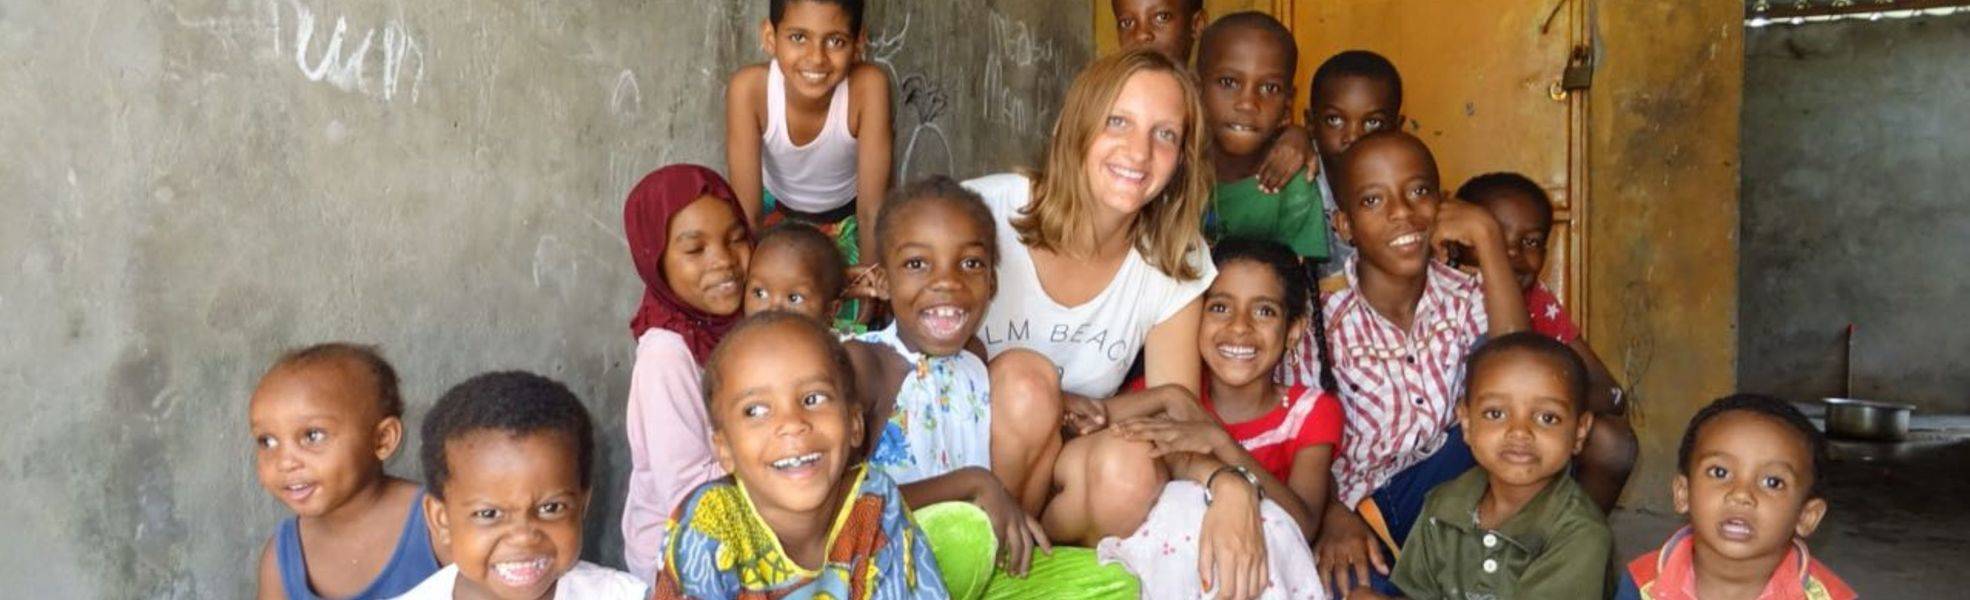 Volunteer is doing her internship abroad in Africa with children